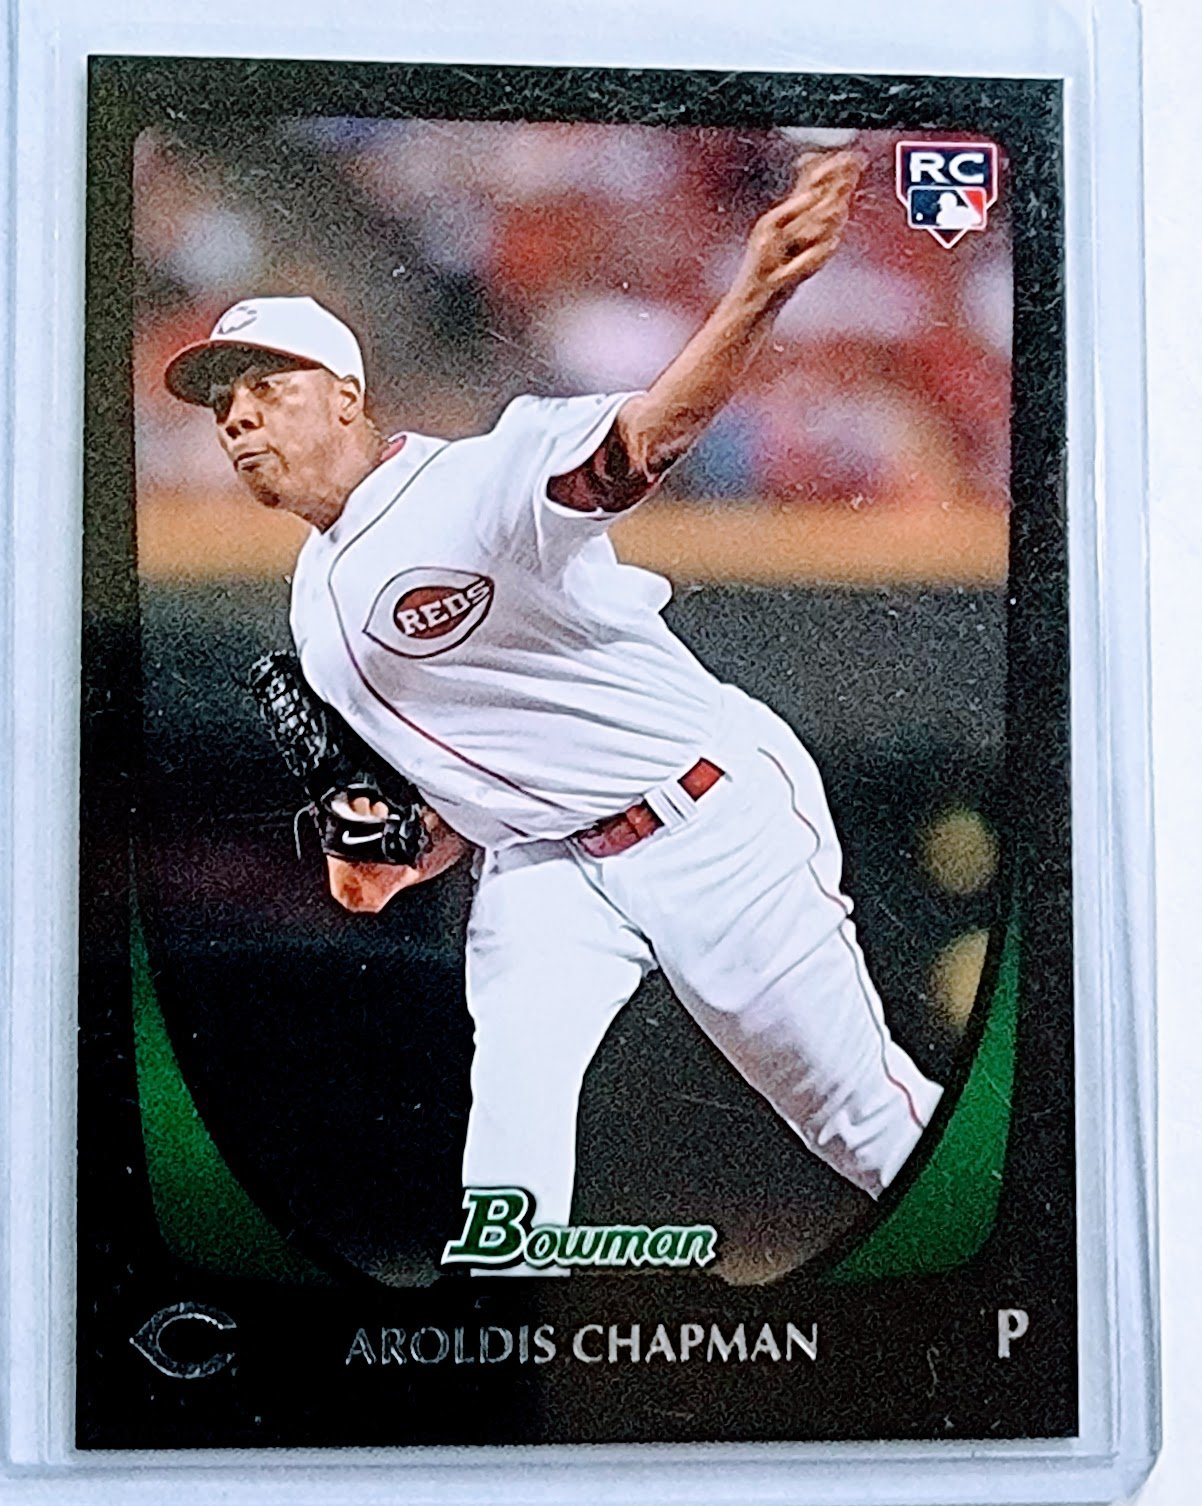 2011 Bowman Aroldis Chapman Rookie Baseball Card TPTV simple Xclusive Collectibles   